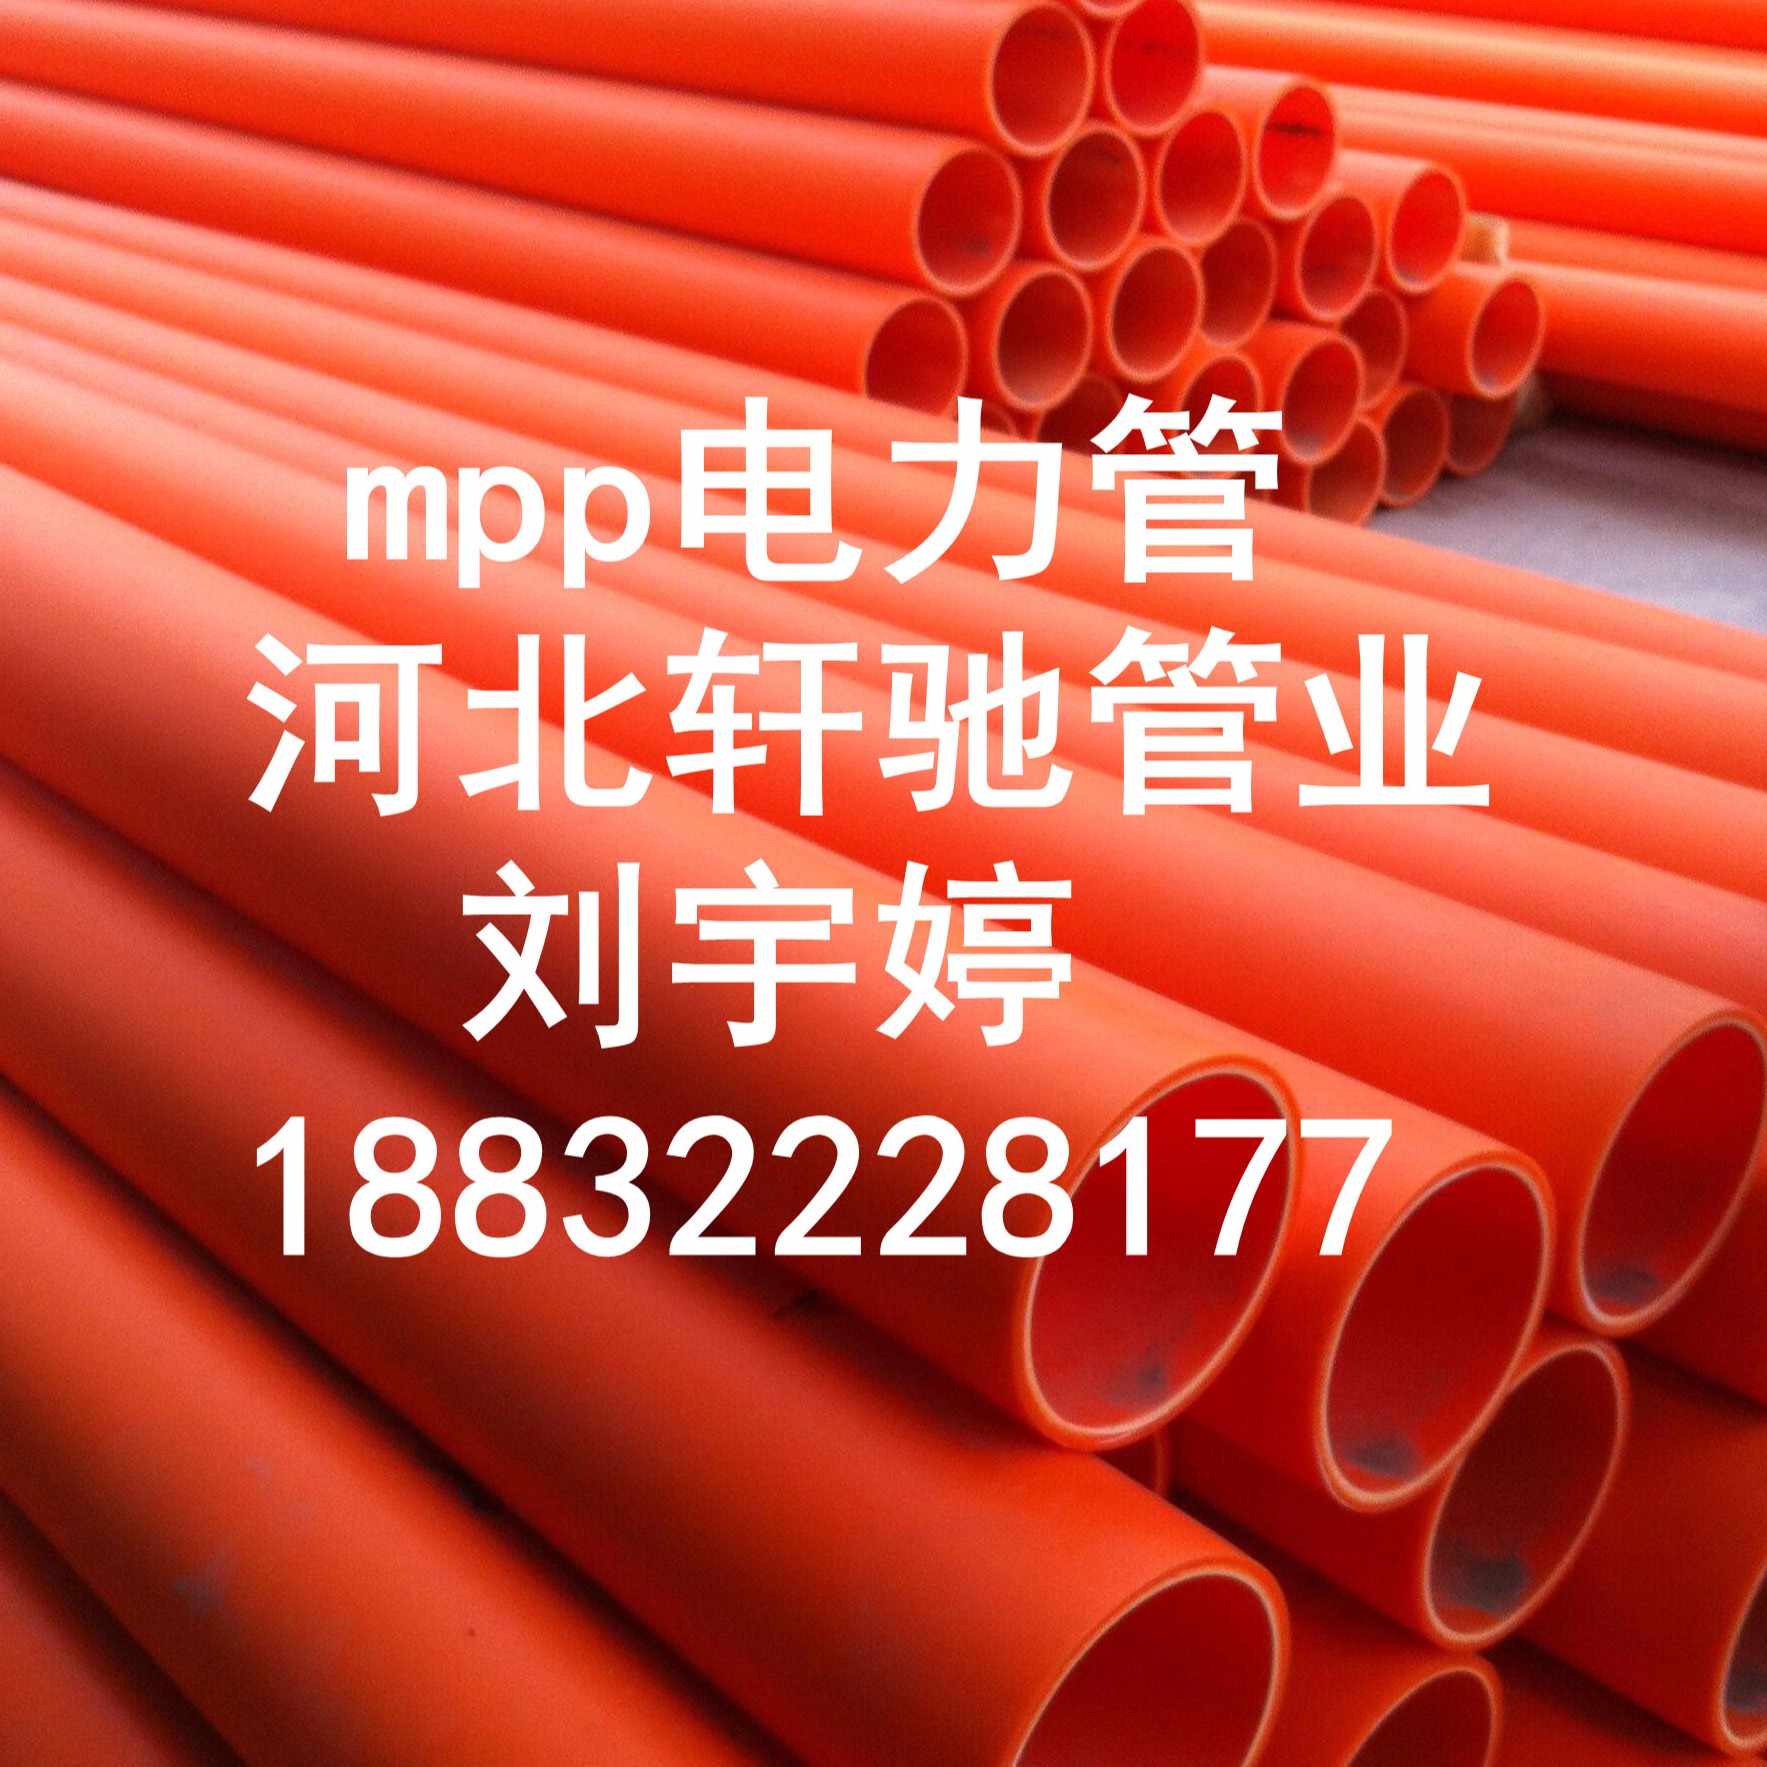 mpp管材mpp电力管排管非开挖电力管市政工程河北轩驰塑料管材厂家